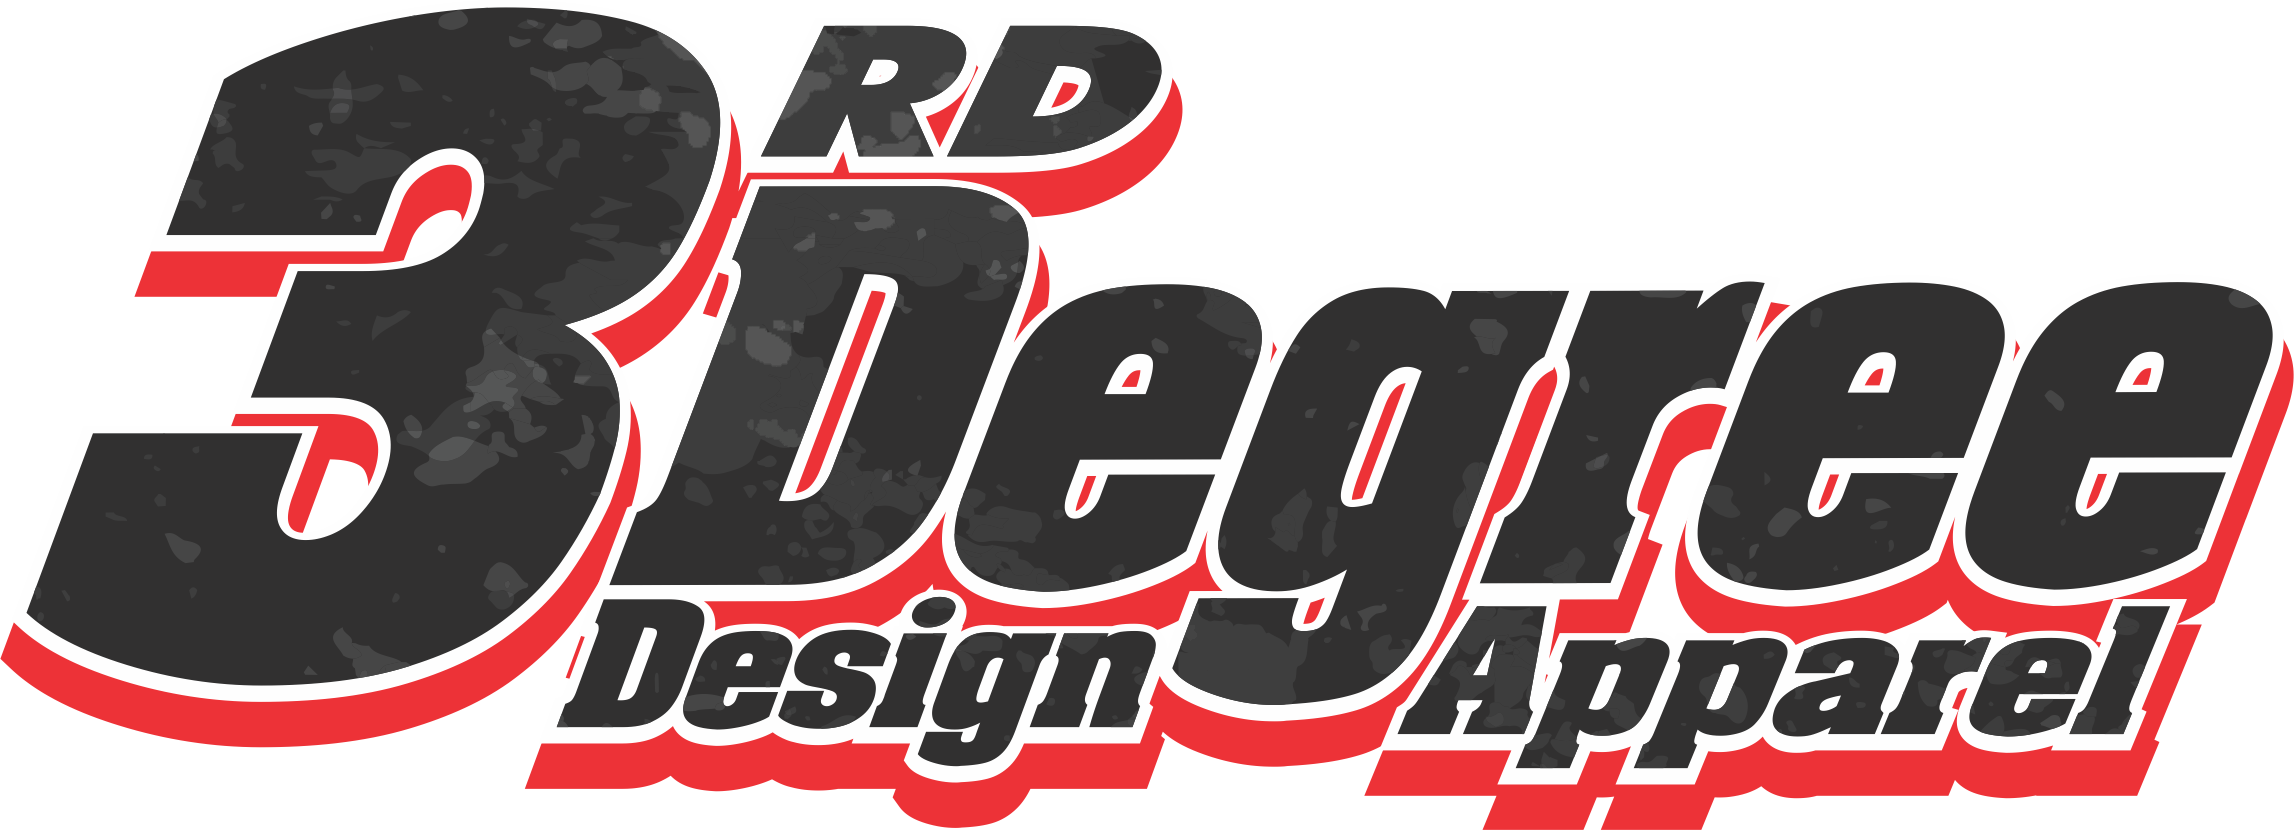 3rd degree logo